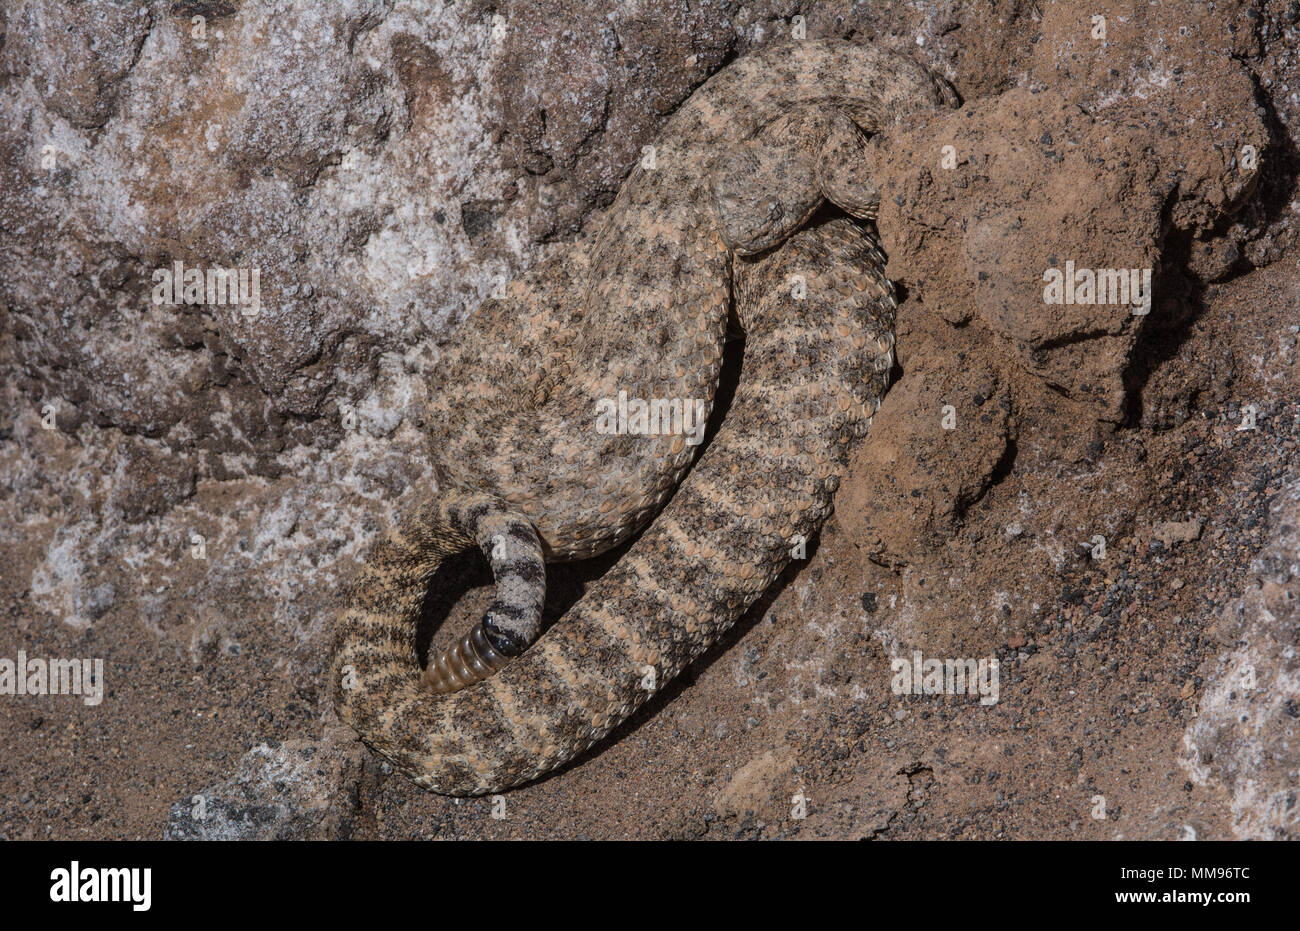 Horse Head Island Rattlesnake (Crotalus polisi) from Isla Cabeza de Caballo, Baja California, Mexico. Stock Photo